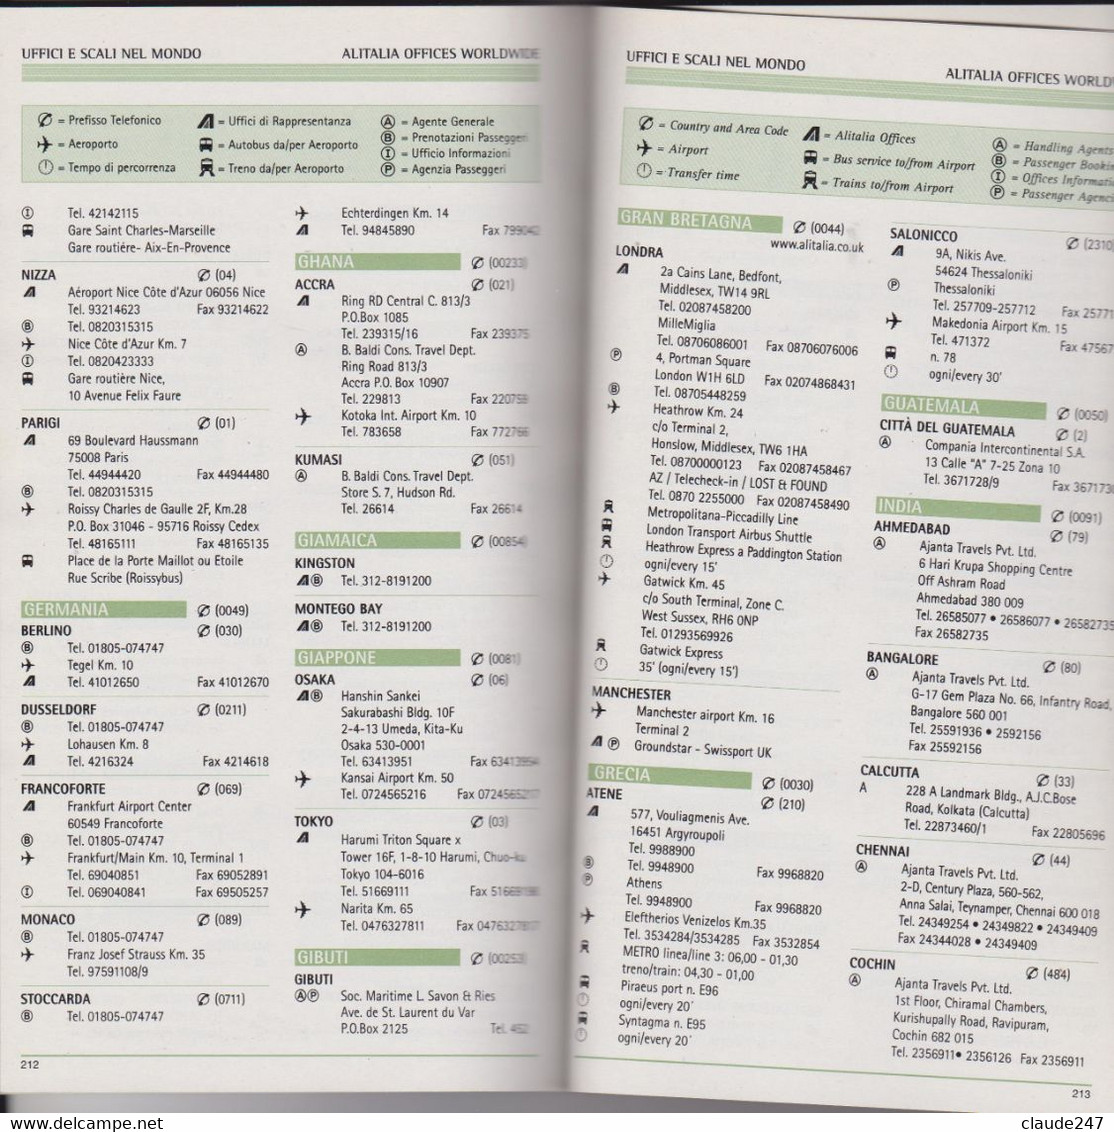 Alitalia Easy Timetable - Orario Generale Periodo Oct 31 2004 26 Mar 2005 - Horaires